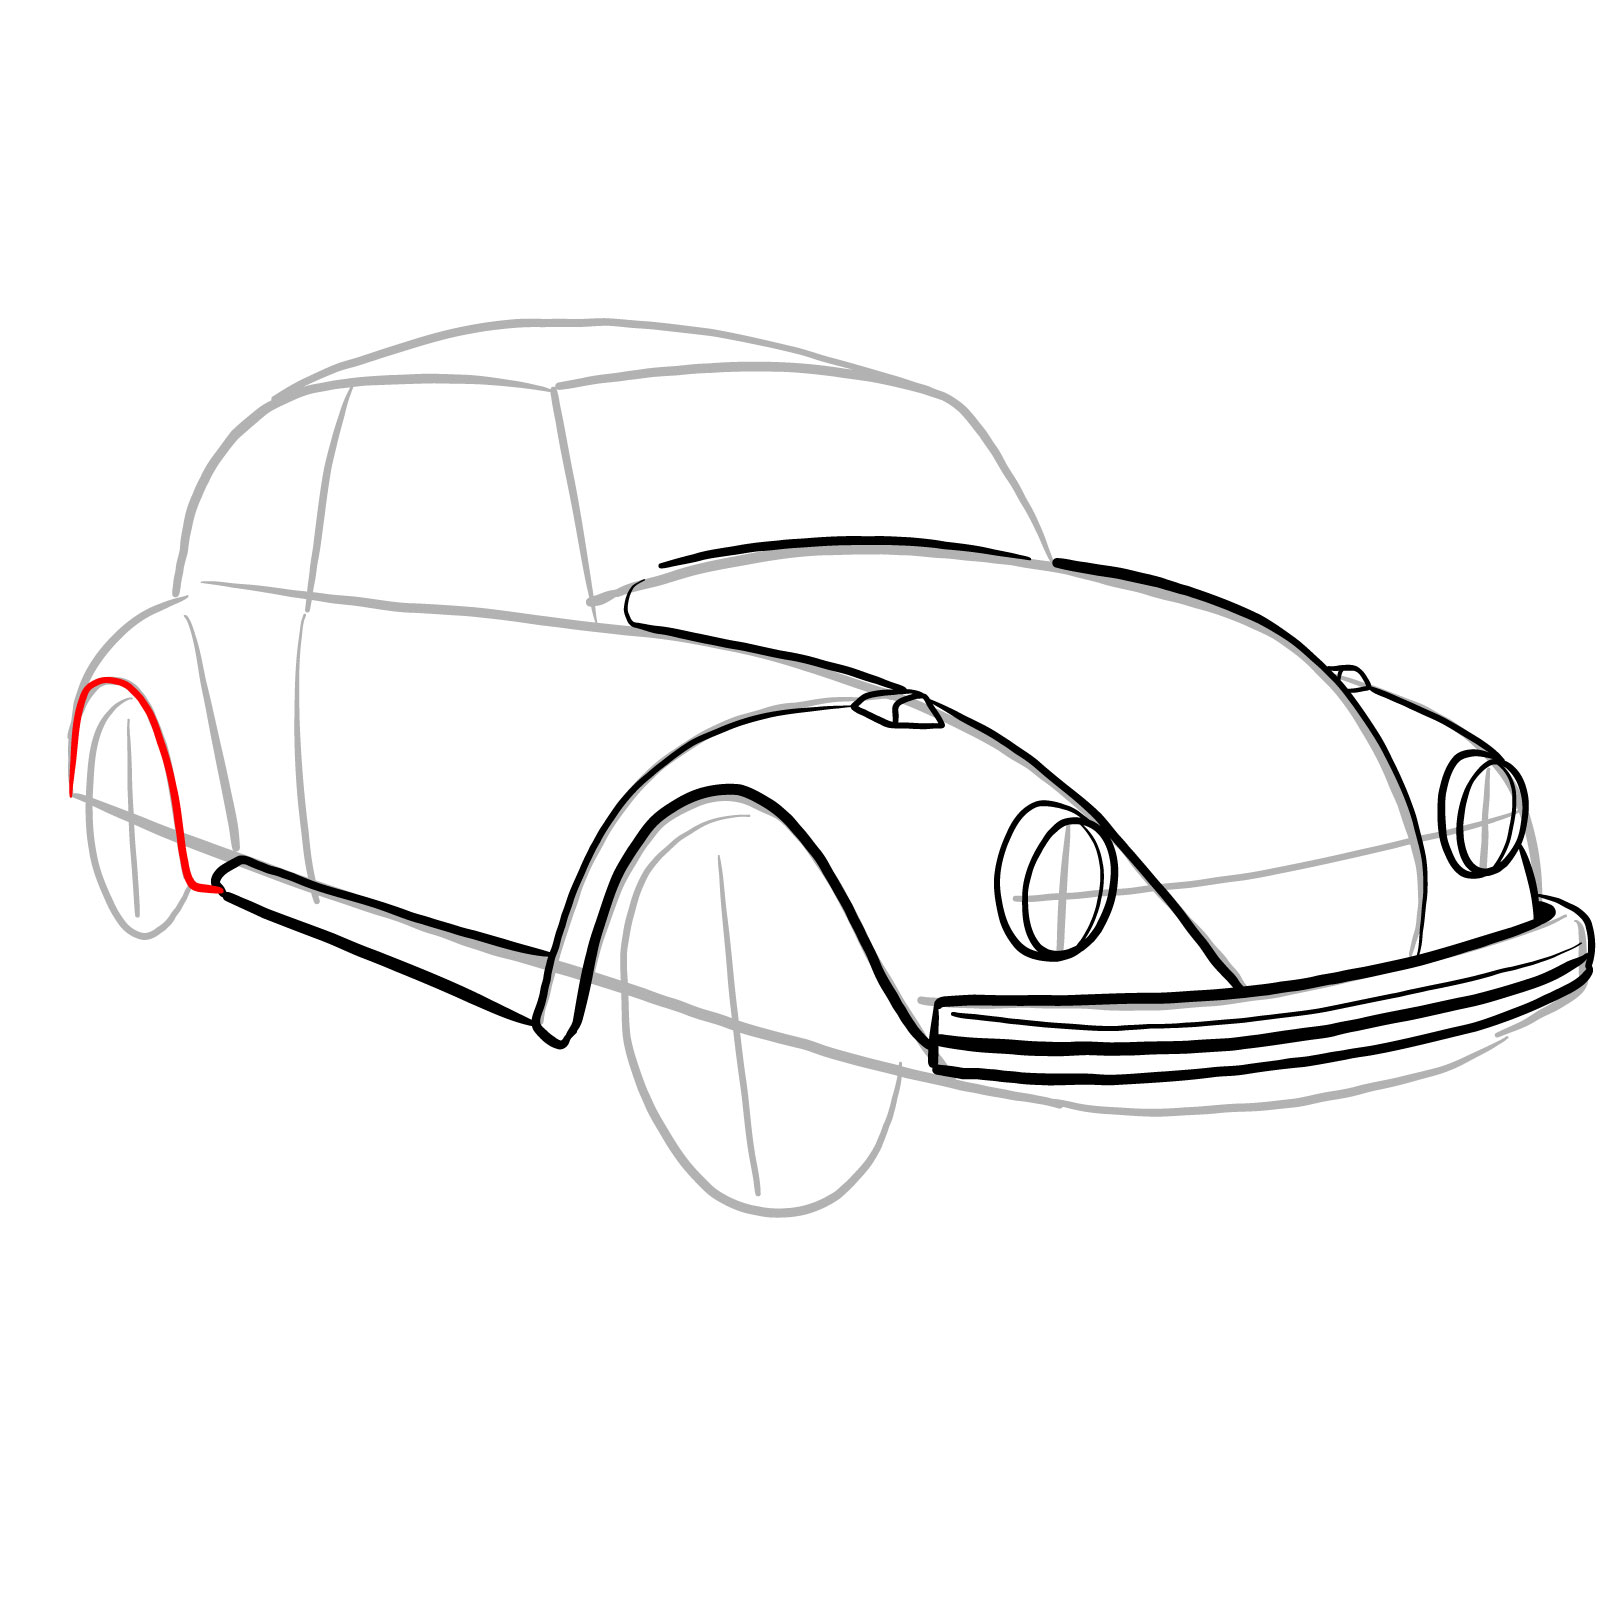 How to draw Volkswagen Beetle 1972 - step 16